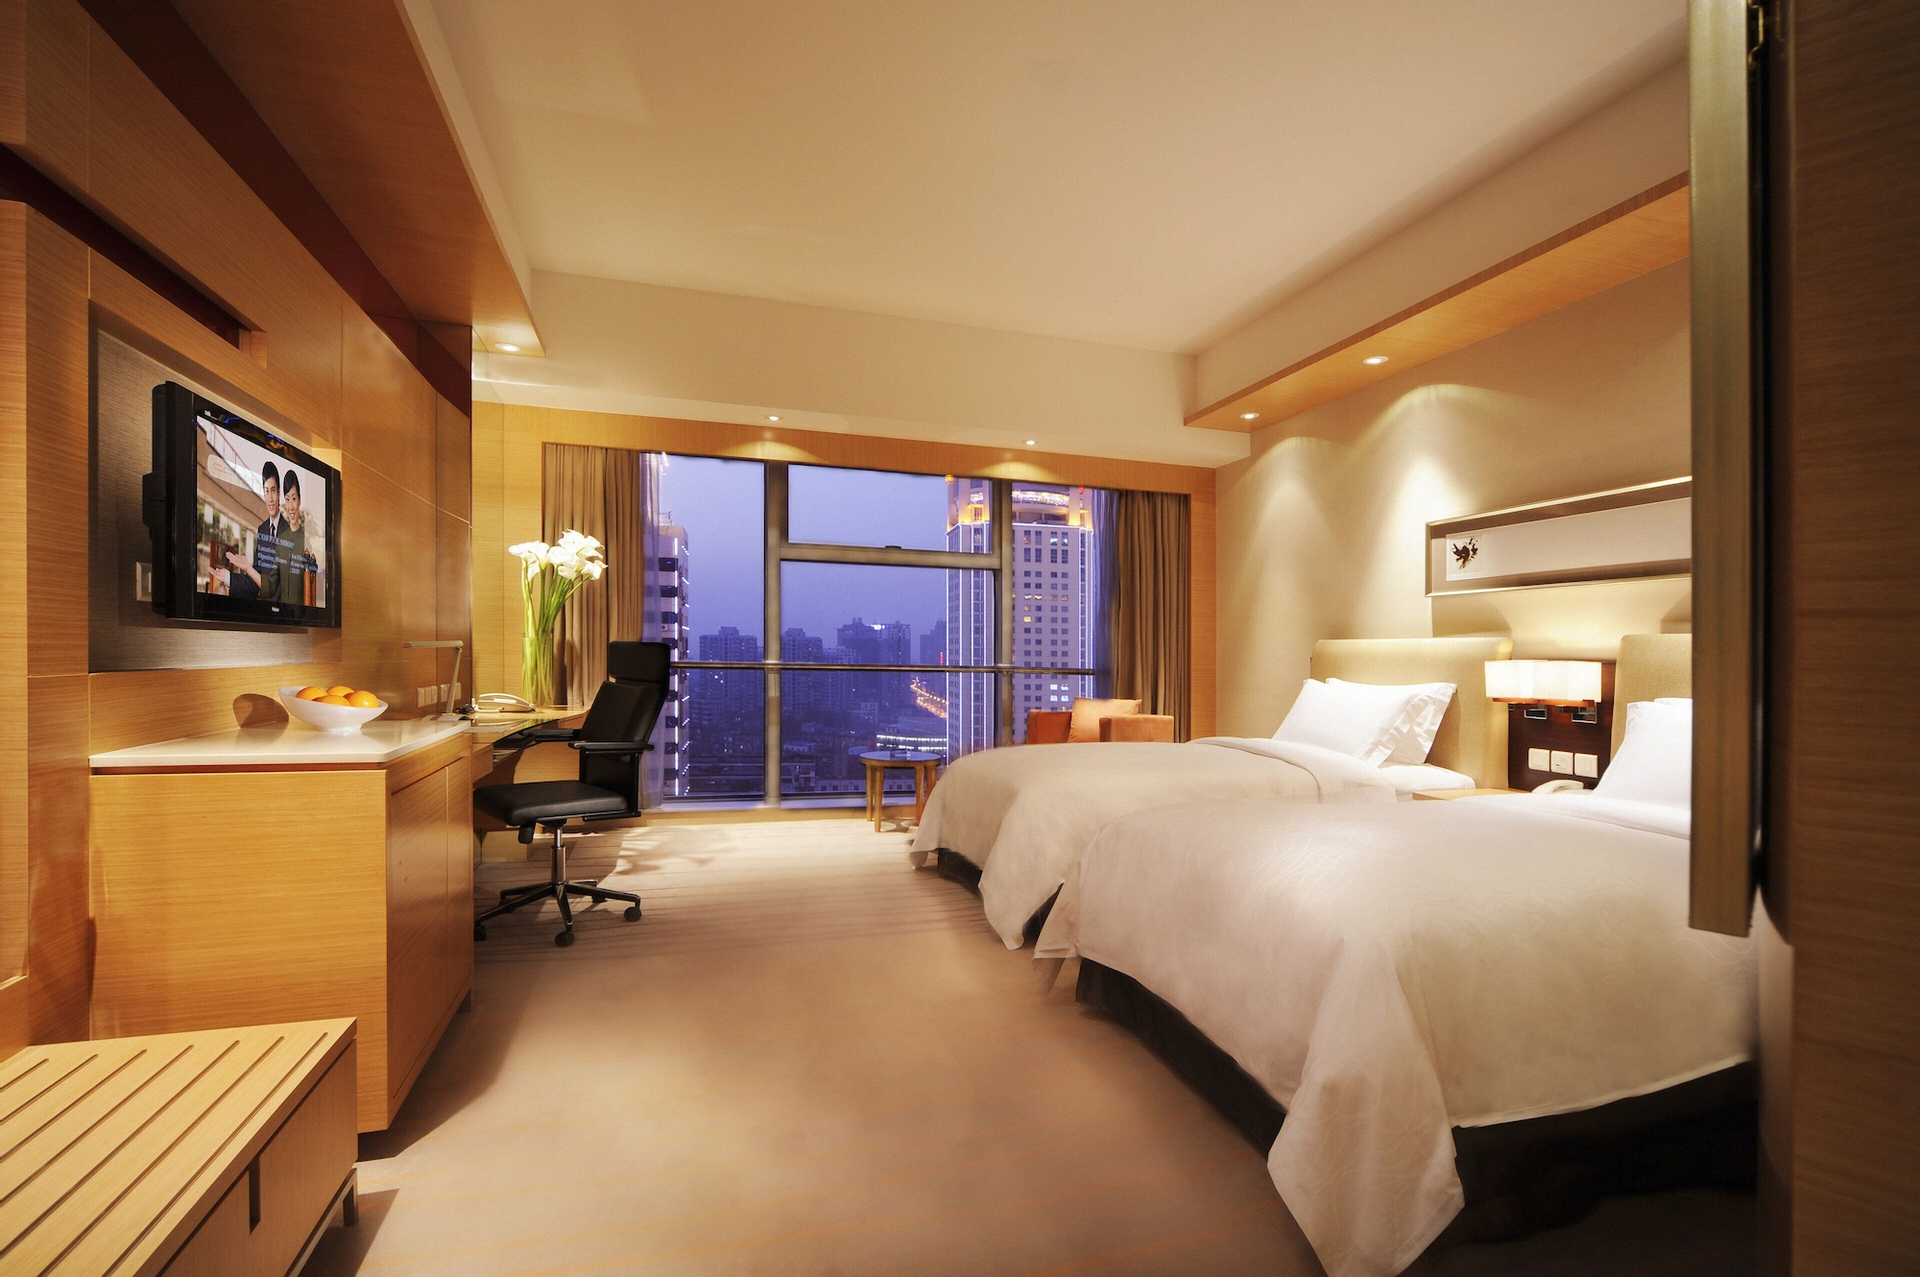 Bedroom 4, New World Wuhan Hotel, Wuhan